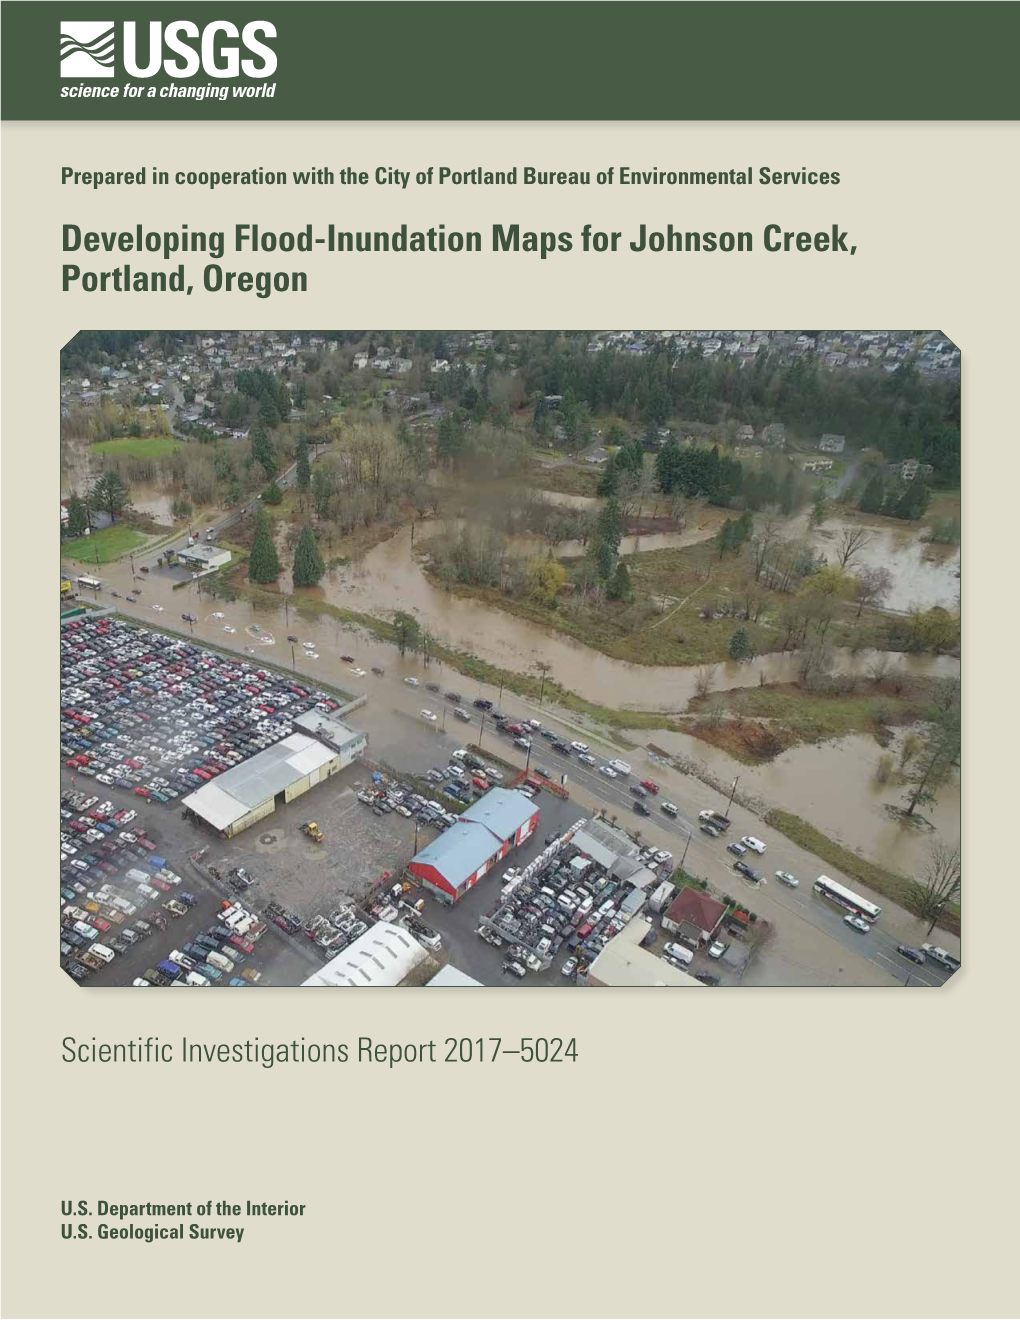 Developing Flood-Inundation Maps for Johnson Creek, Portland, Oregon